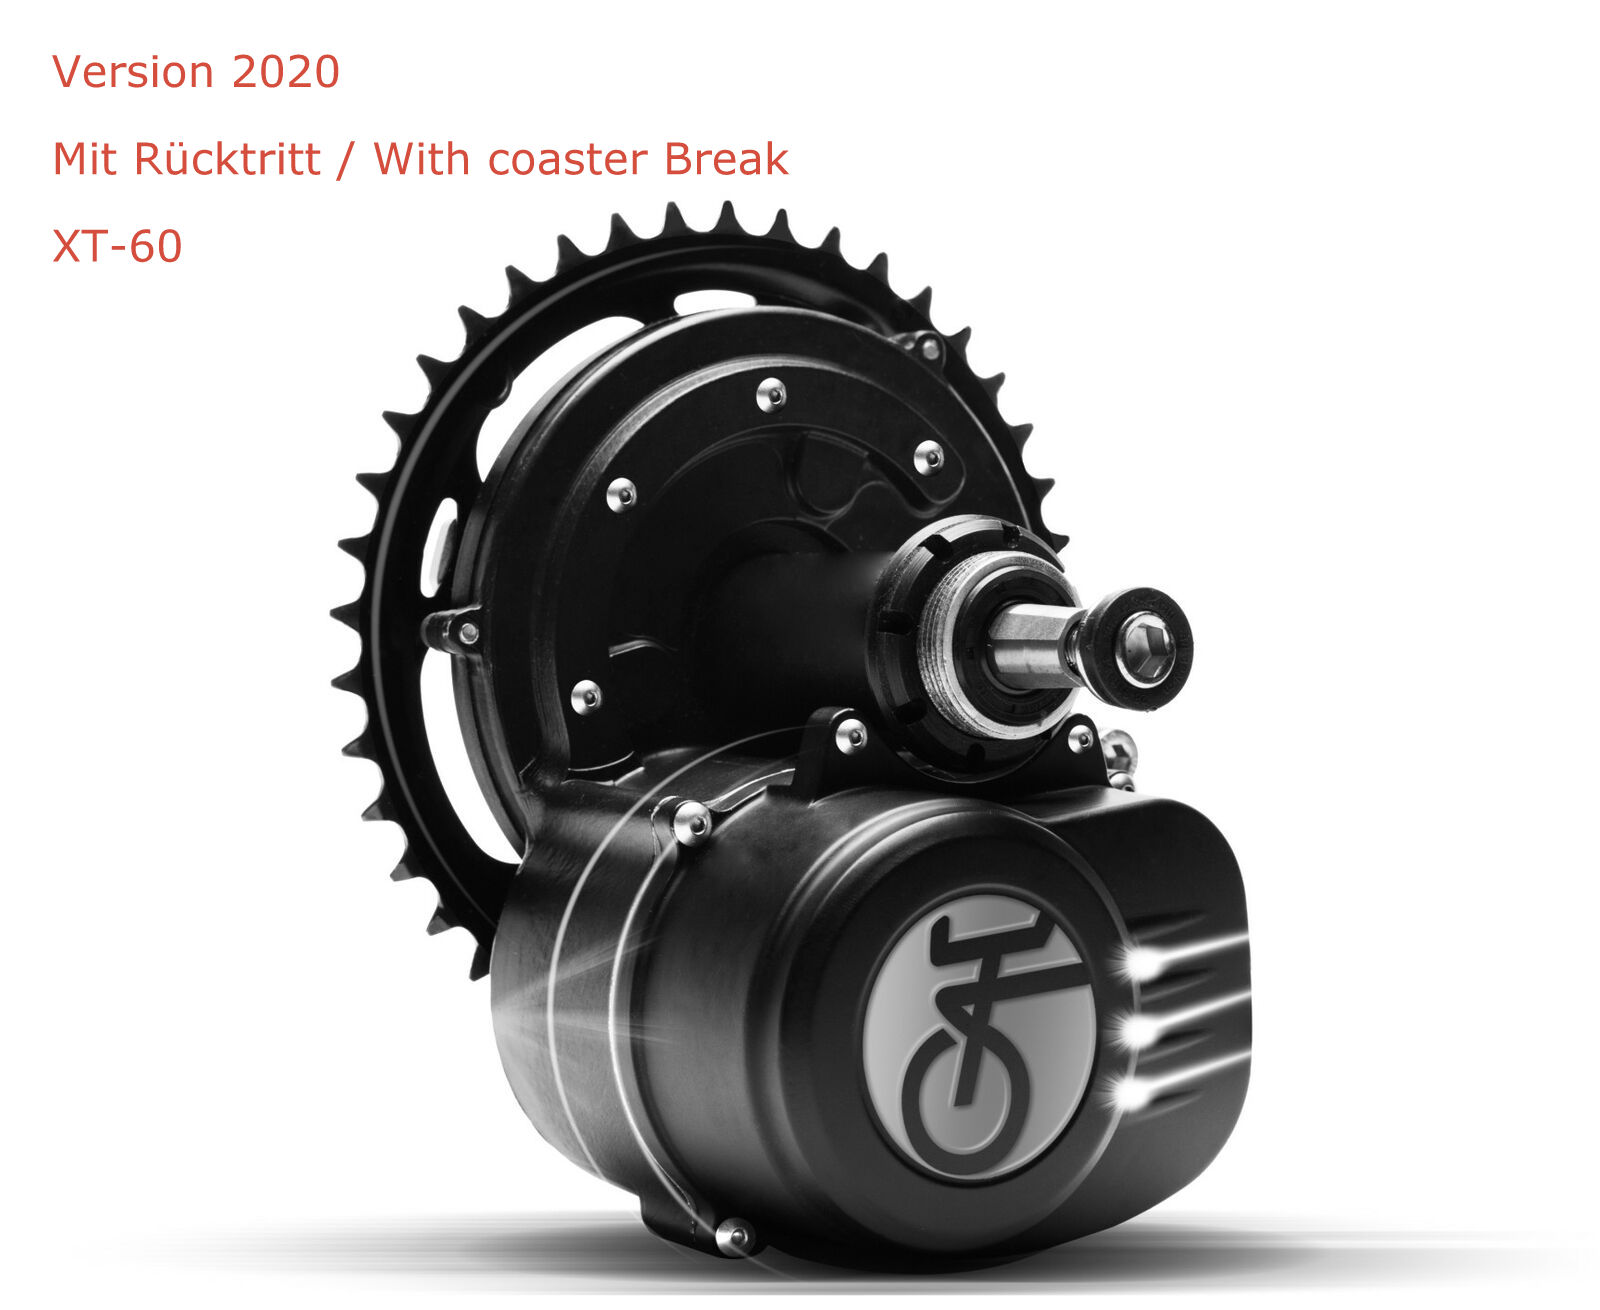 Tongsheng TSDZ2 52V 250W Mid Motor + Accessories + Break Coaster